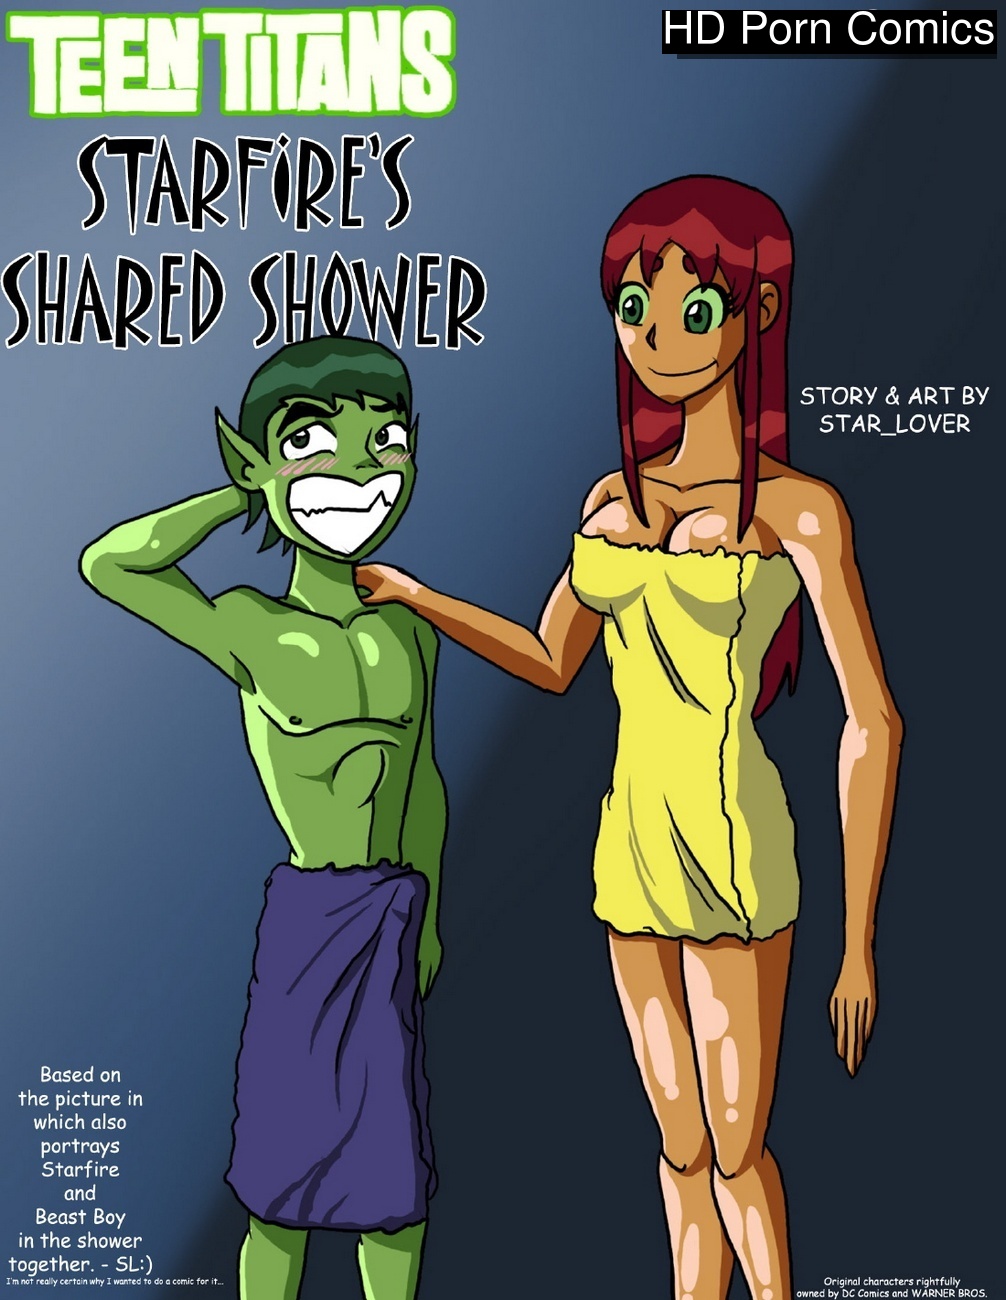 Musilimsex - Starfire's Shared Shower Sex Comic - HD Porn Comics